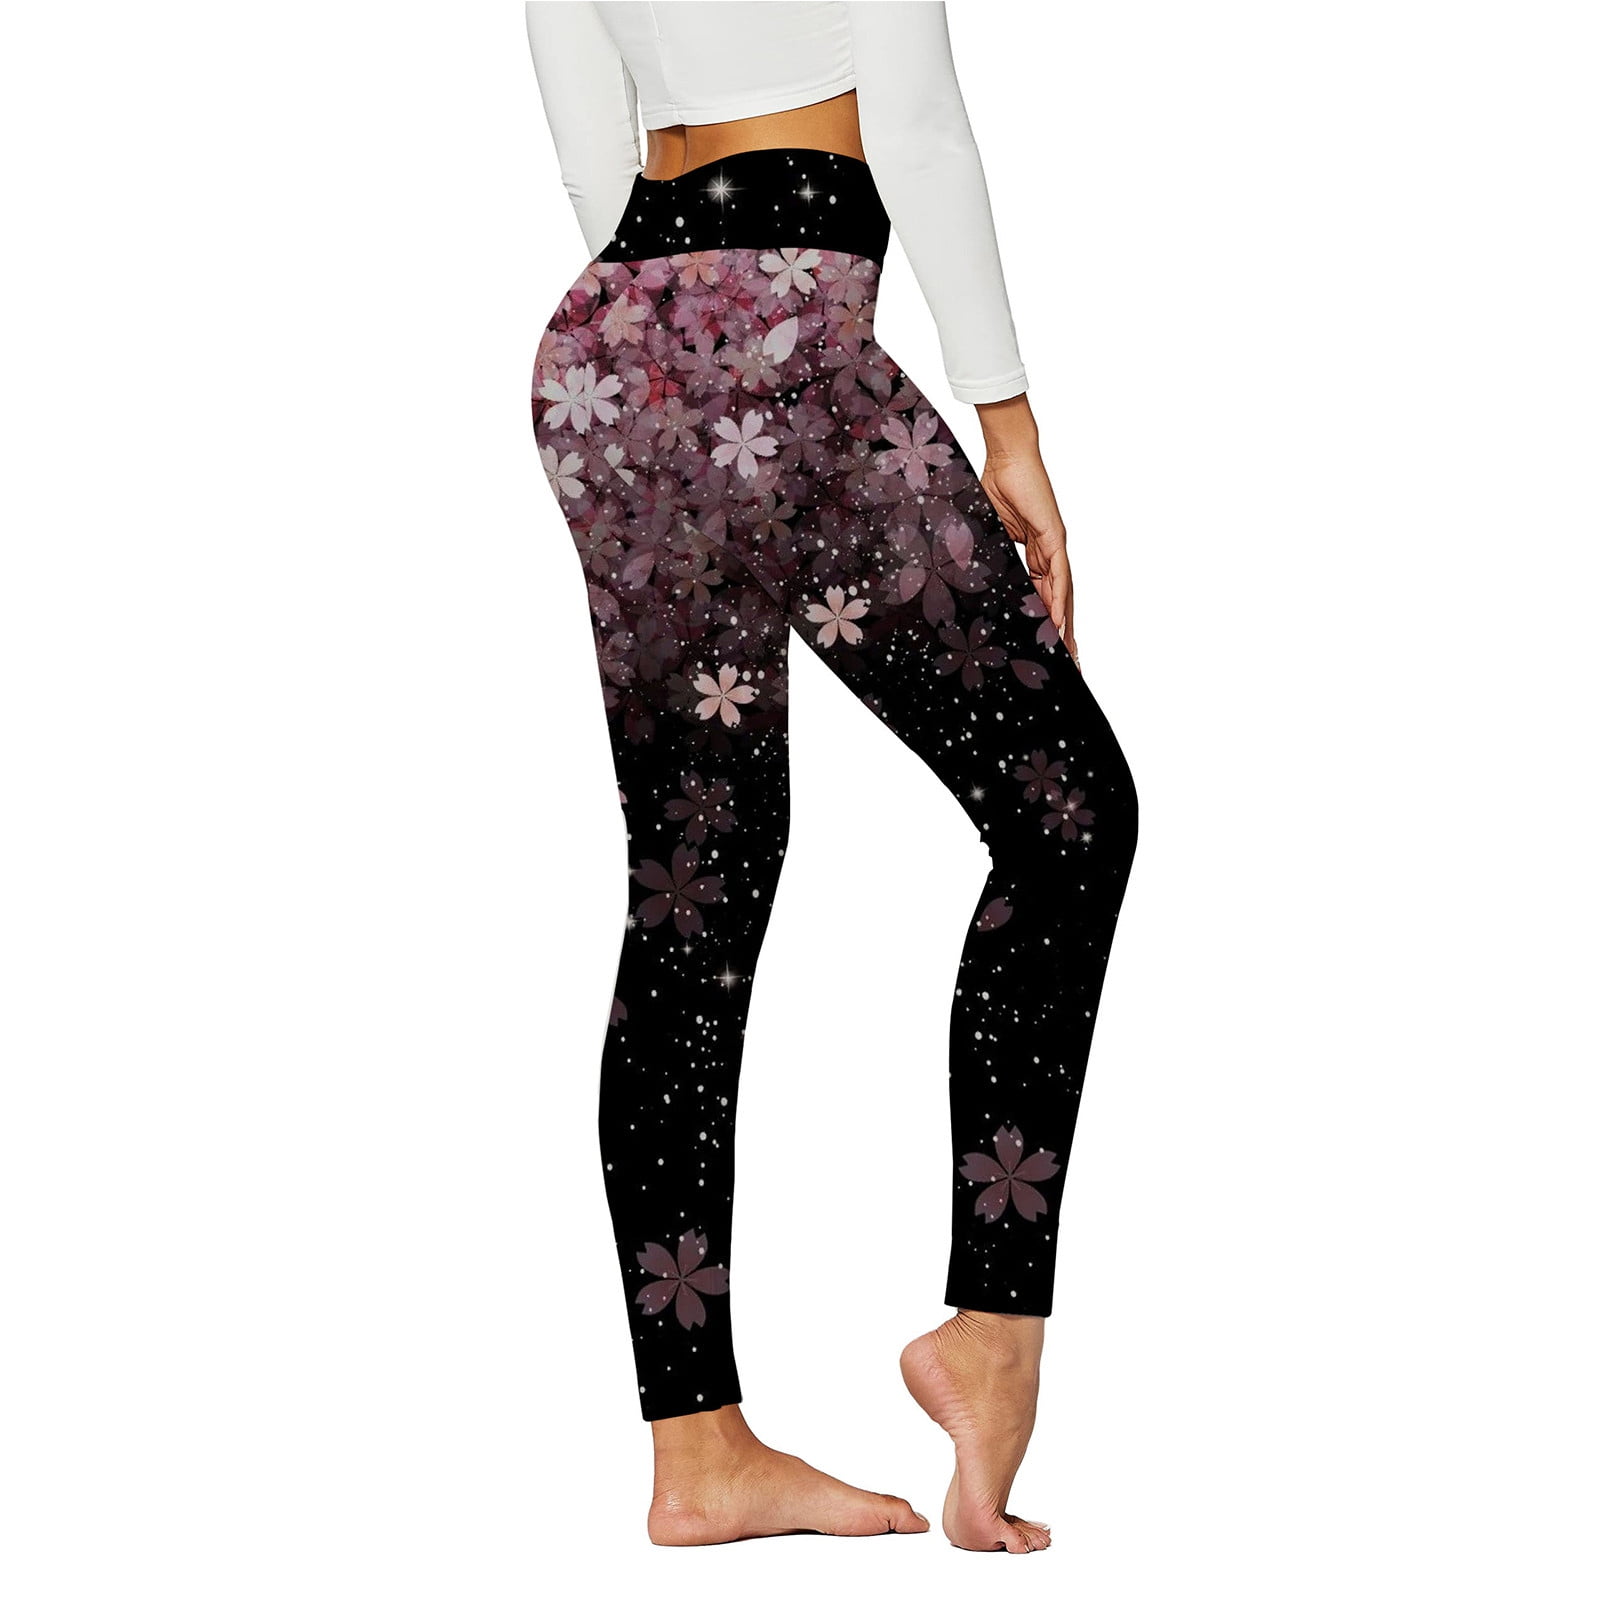 ZHAGHMIN Workout Clothes for Women Women'S Yoga Printed Pant Leggings ...